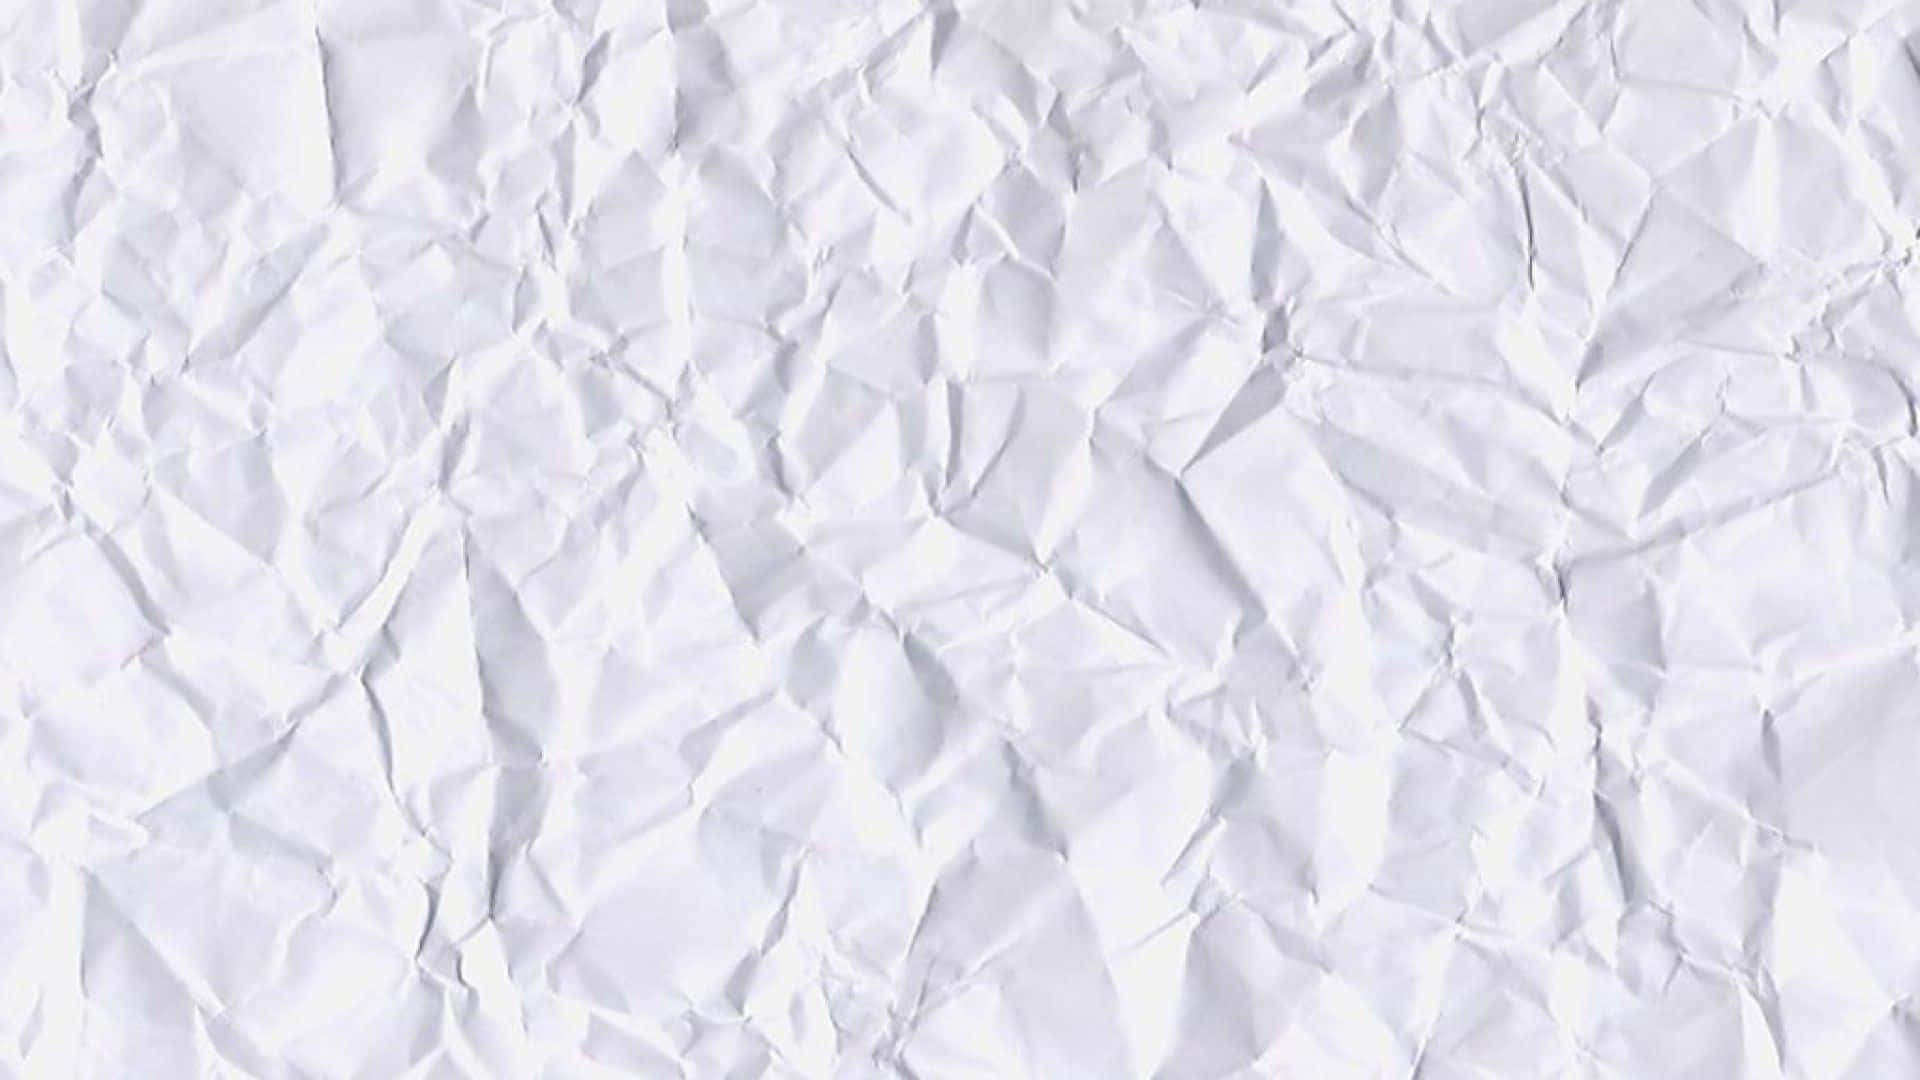 Unlock creative ideas with Crumpled Paper's unique texture